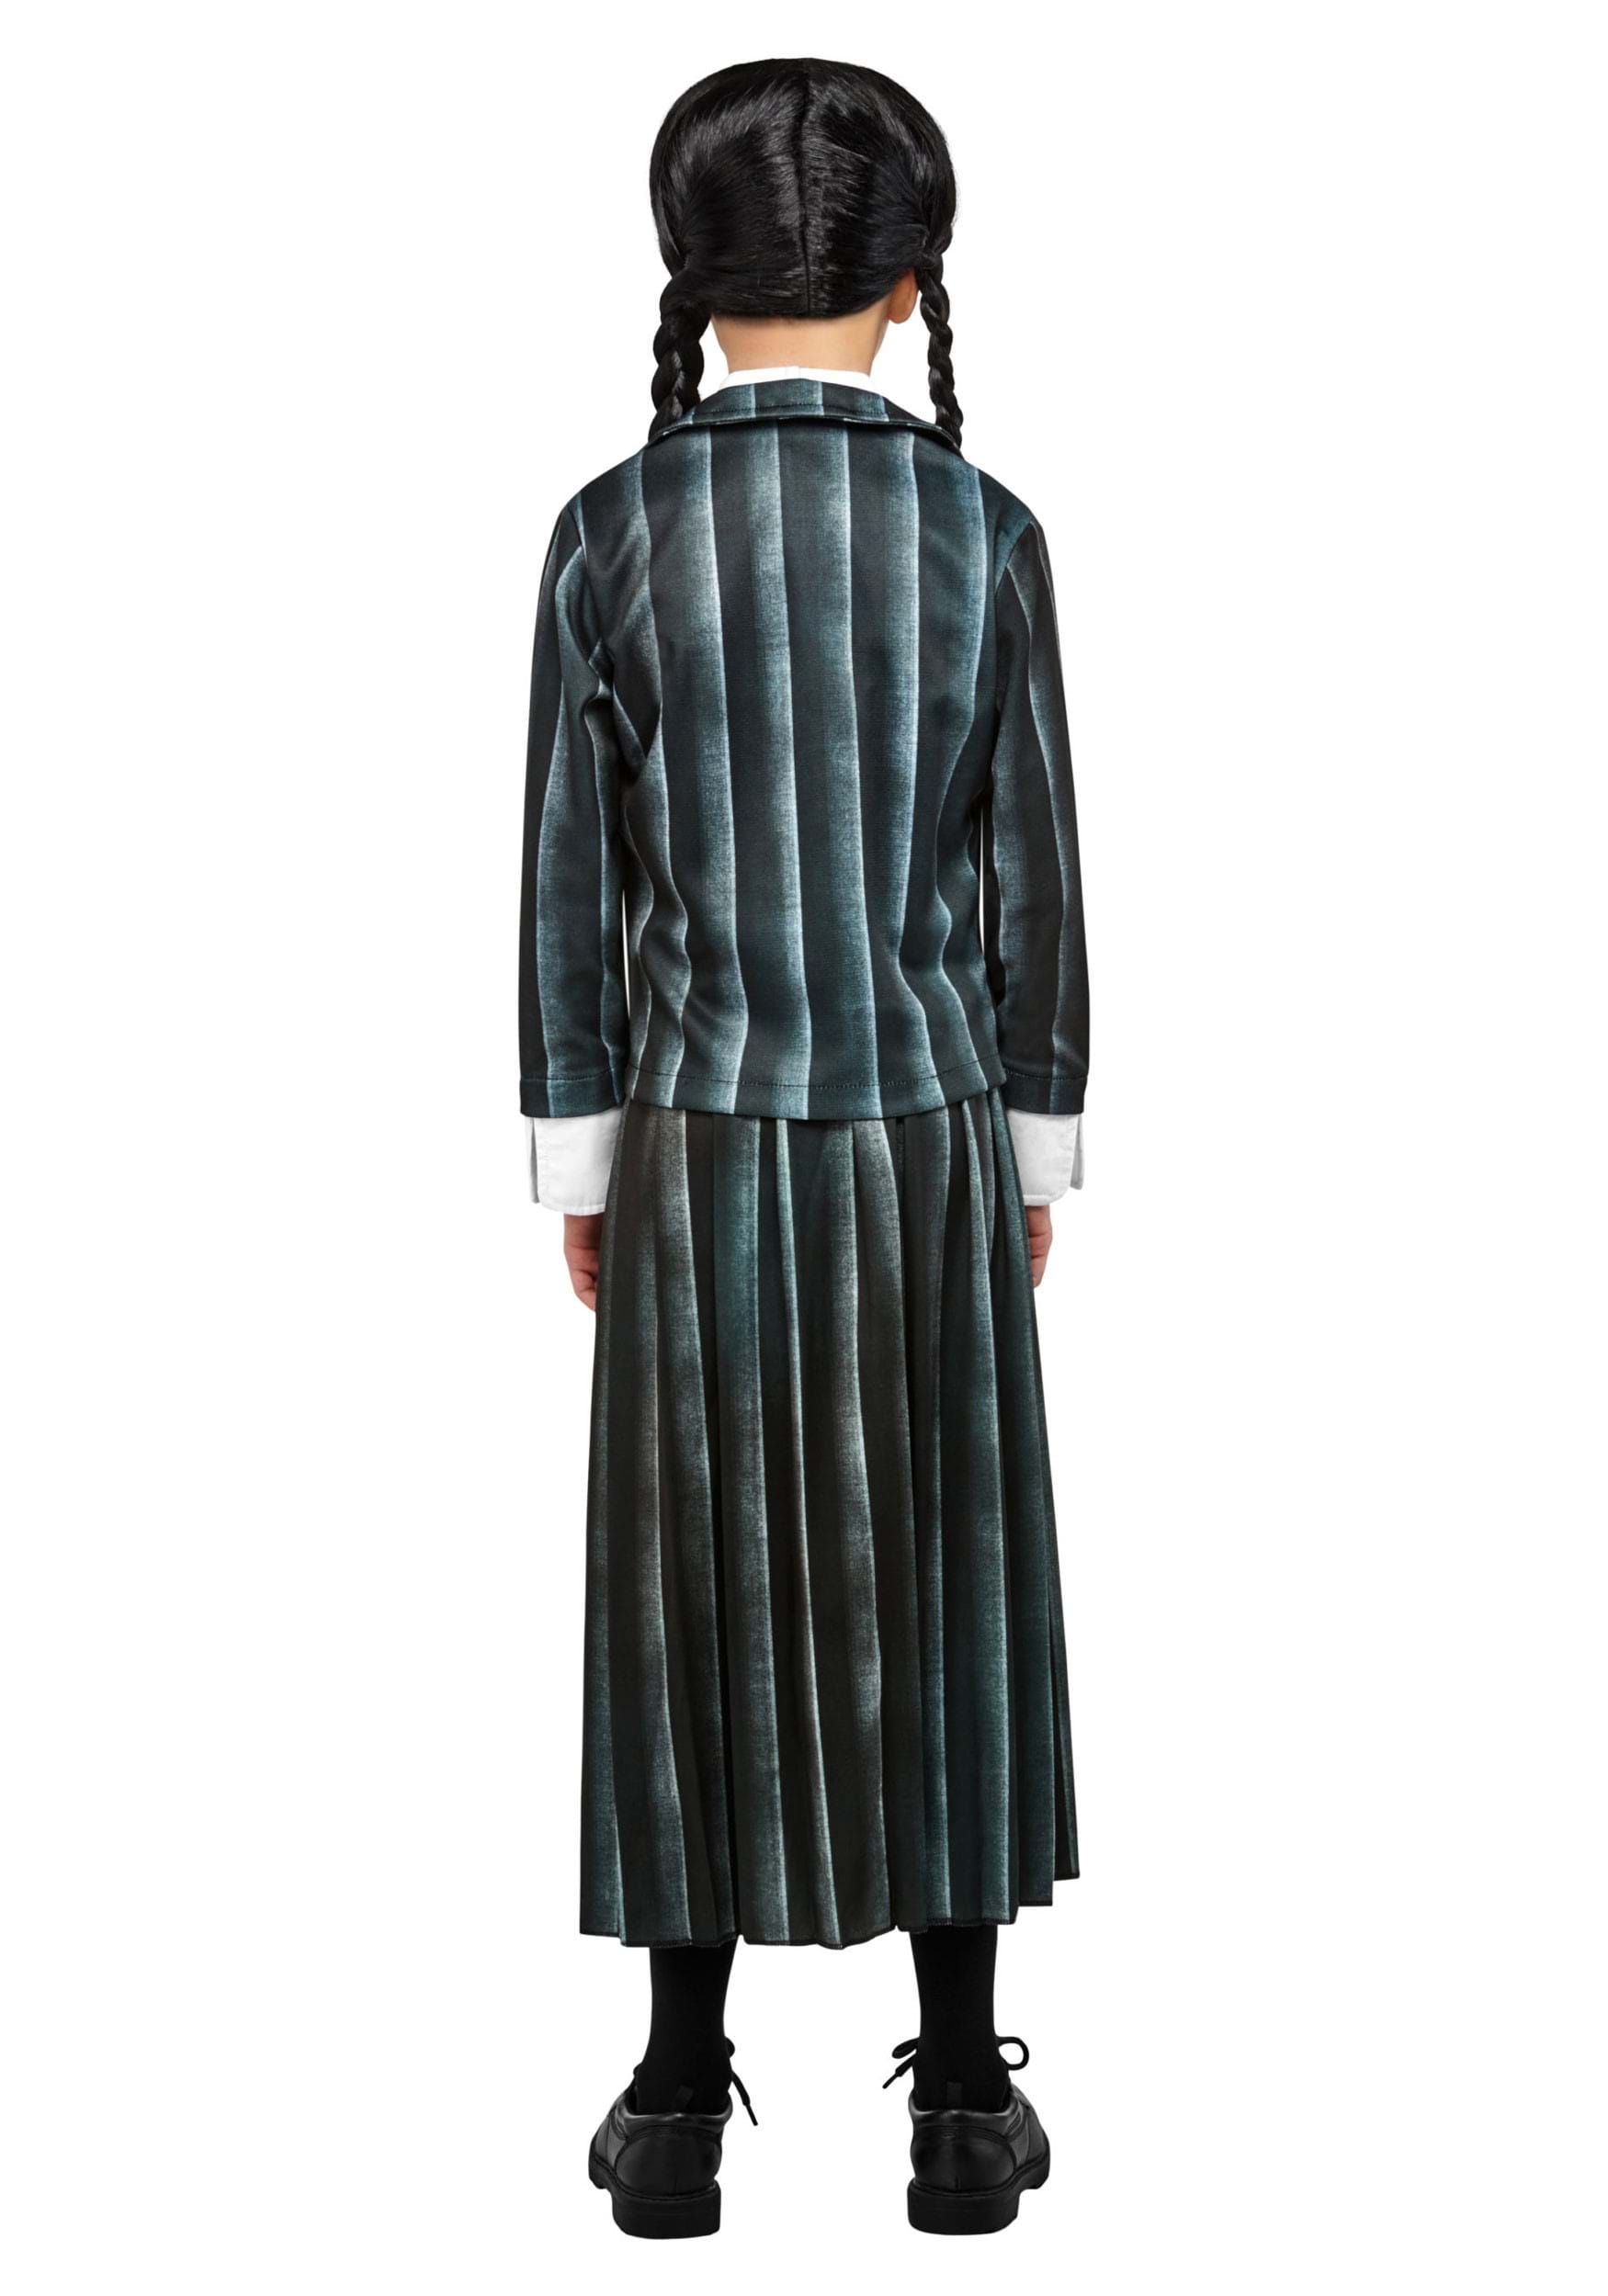 Nevermore Academy Wednesday Uniform Girls Costume